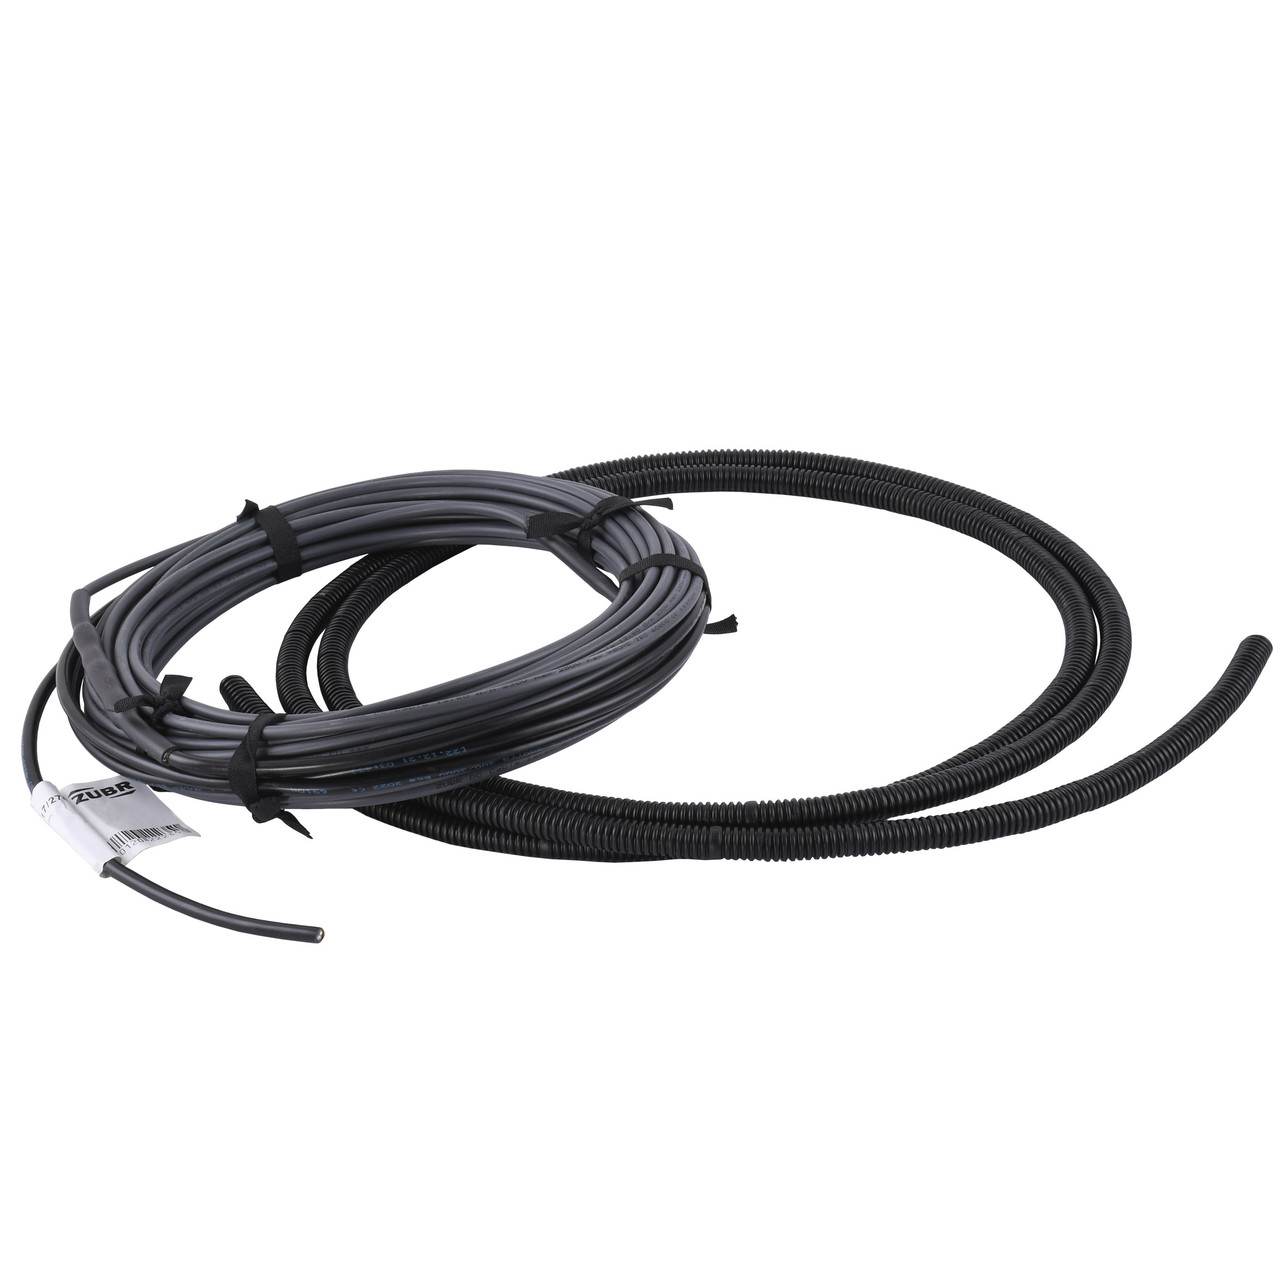 Нагрівальний кабель ZUBR DC Cable 440 Вт / 25,5 м  Купуй Це Galopom